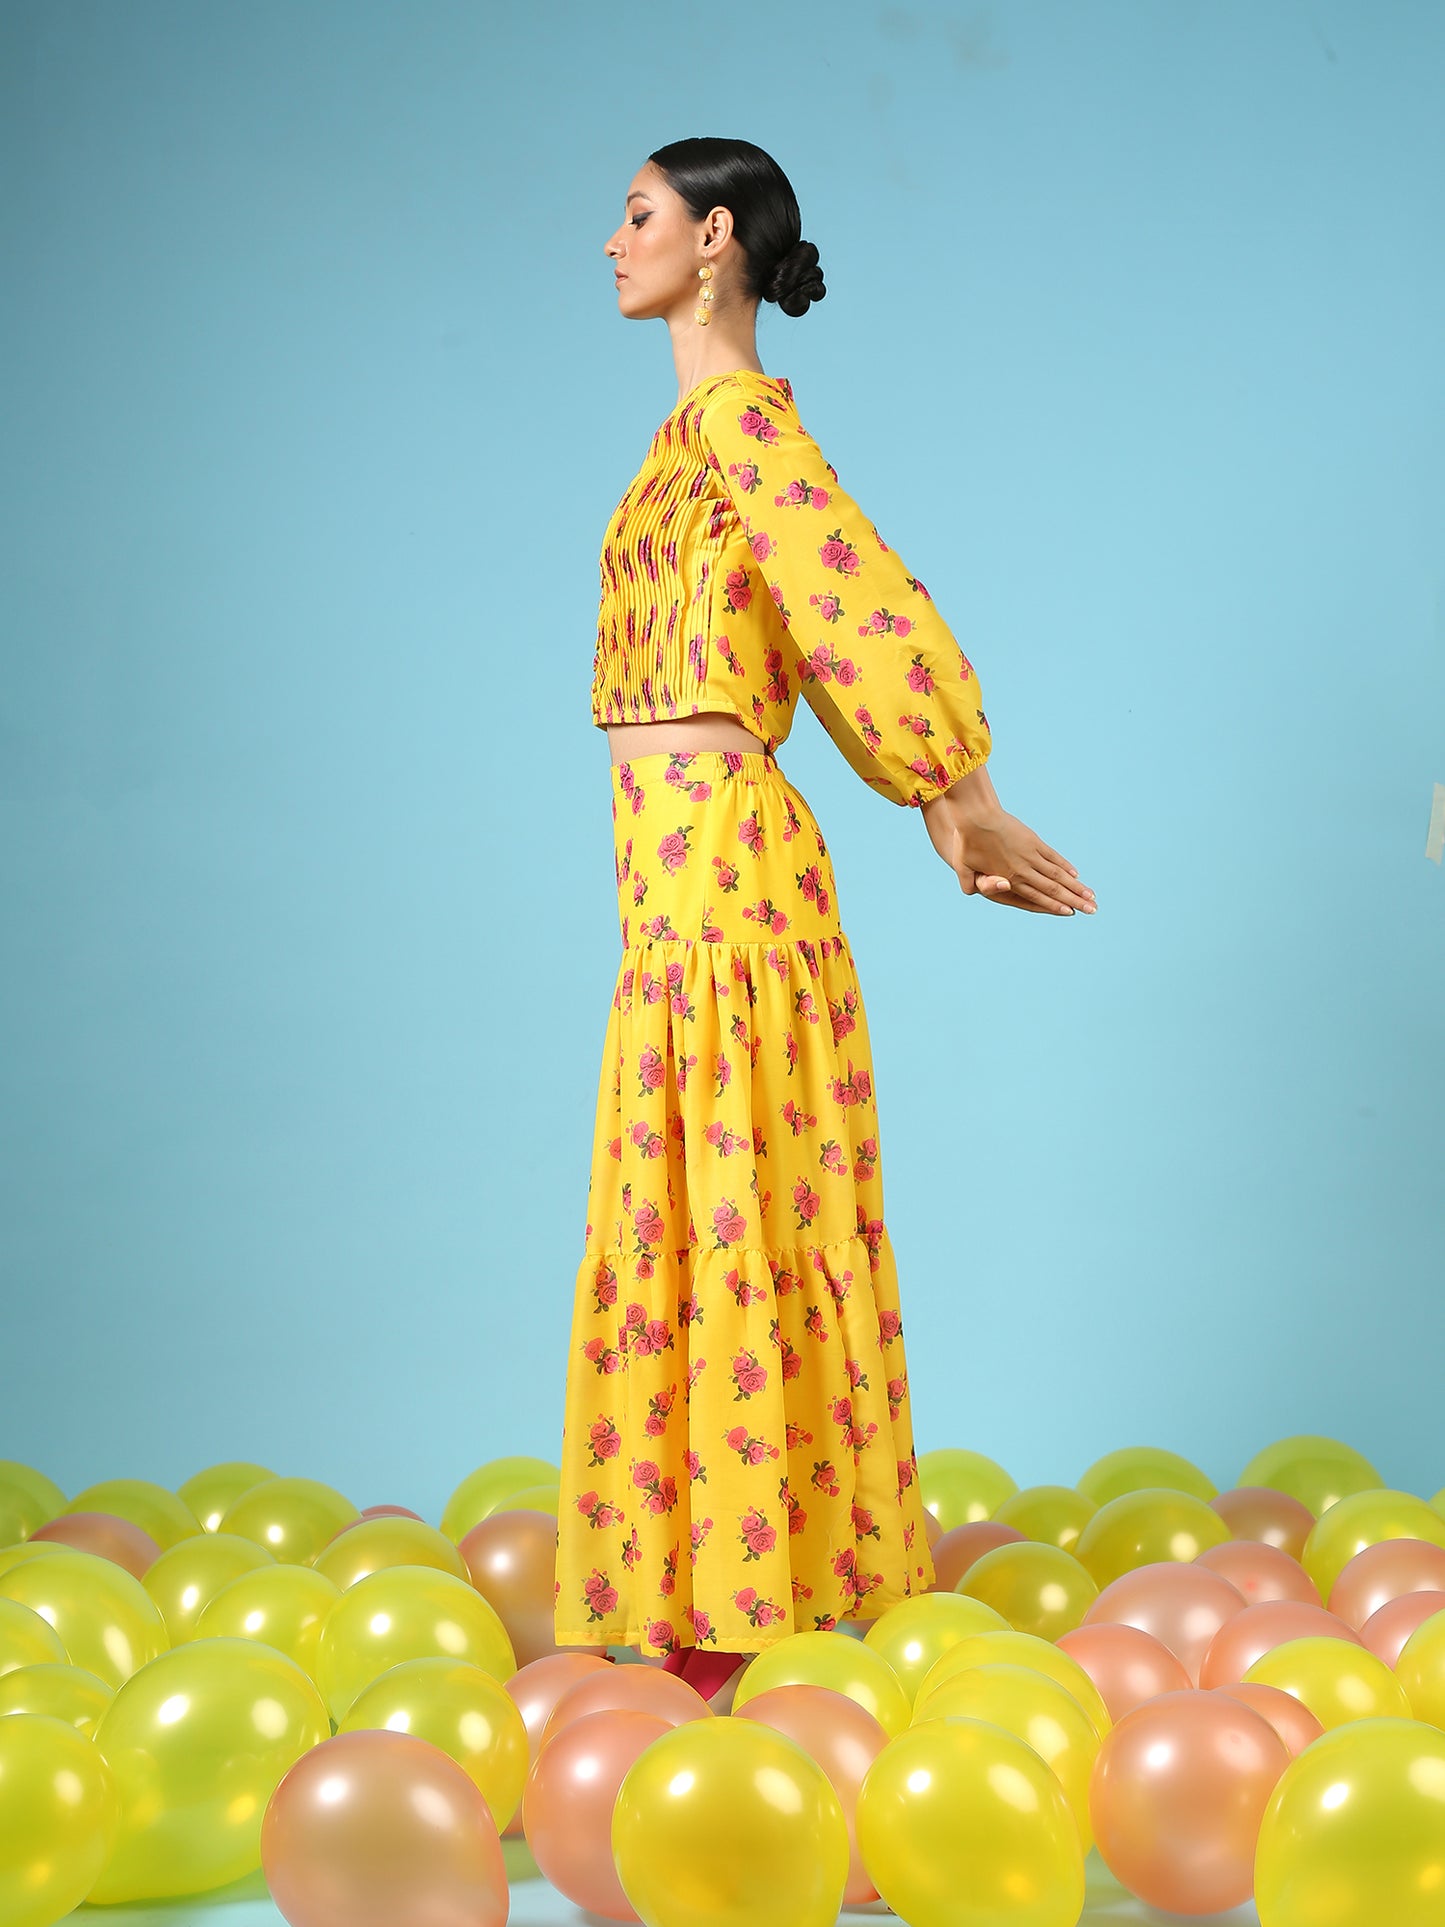 Rose Sunshine Skirt Set - Yellow Digital Printed Cotton Silk Button Up Shirt And Tiered Skirt